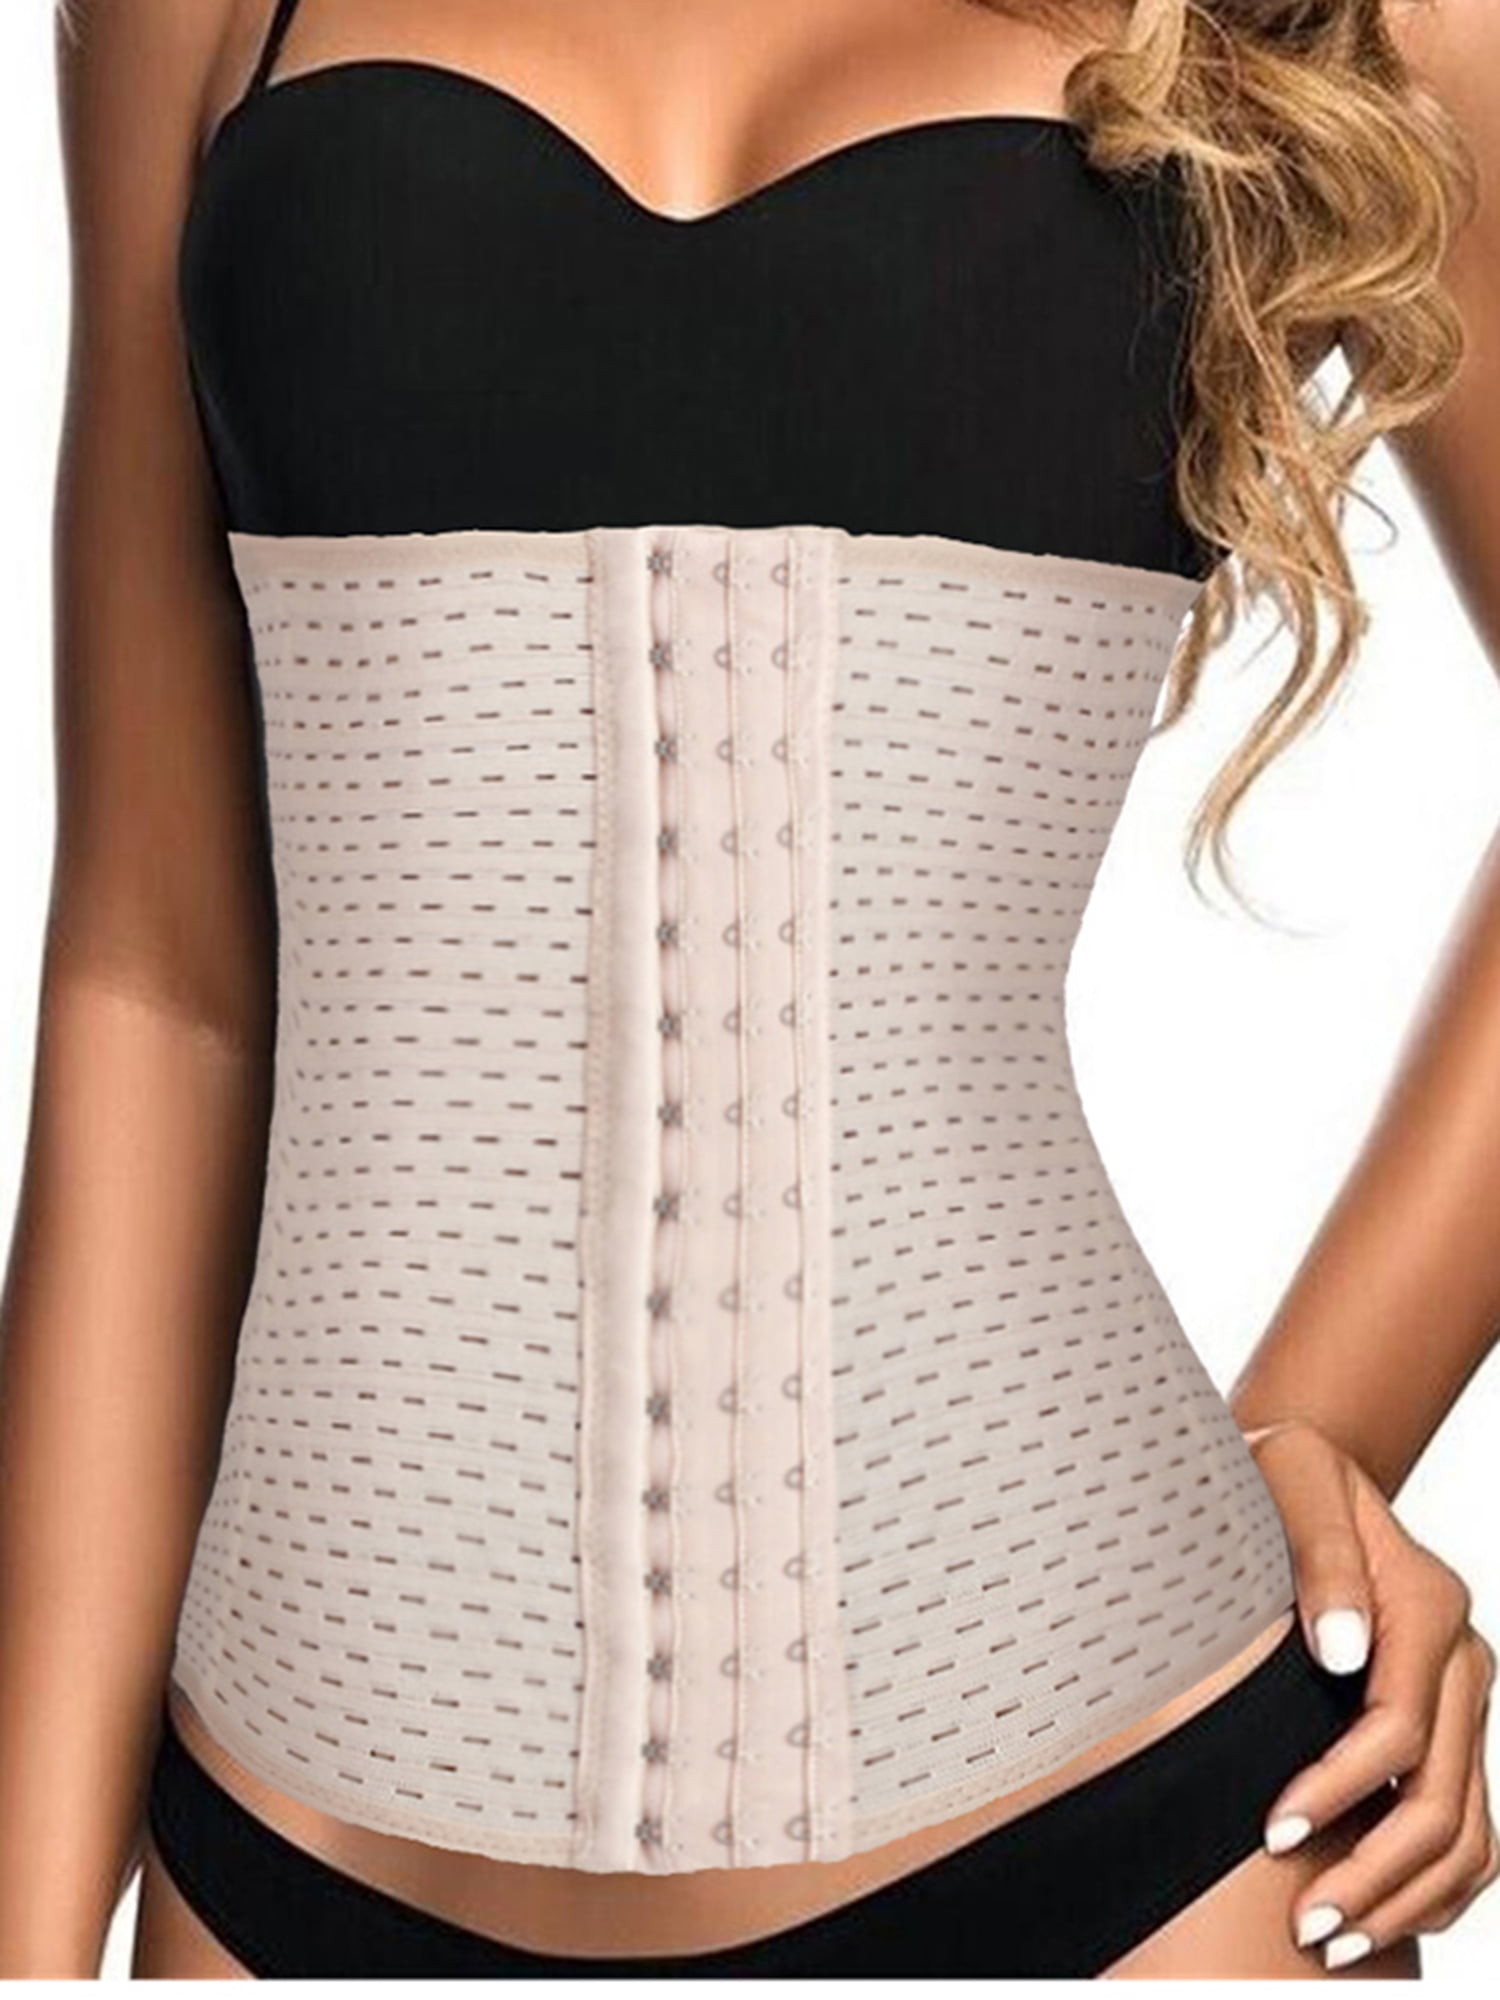 FLORATA Neoprene Sweat Vest for Women Weight Loss Slimming Body Shaper with Adjustable Waist Trimmer Belt 